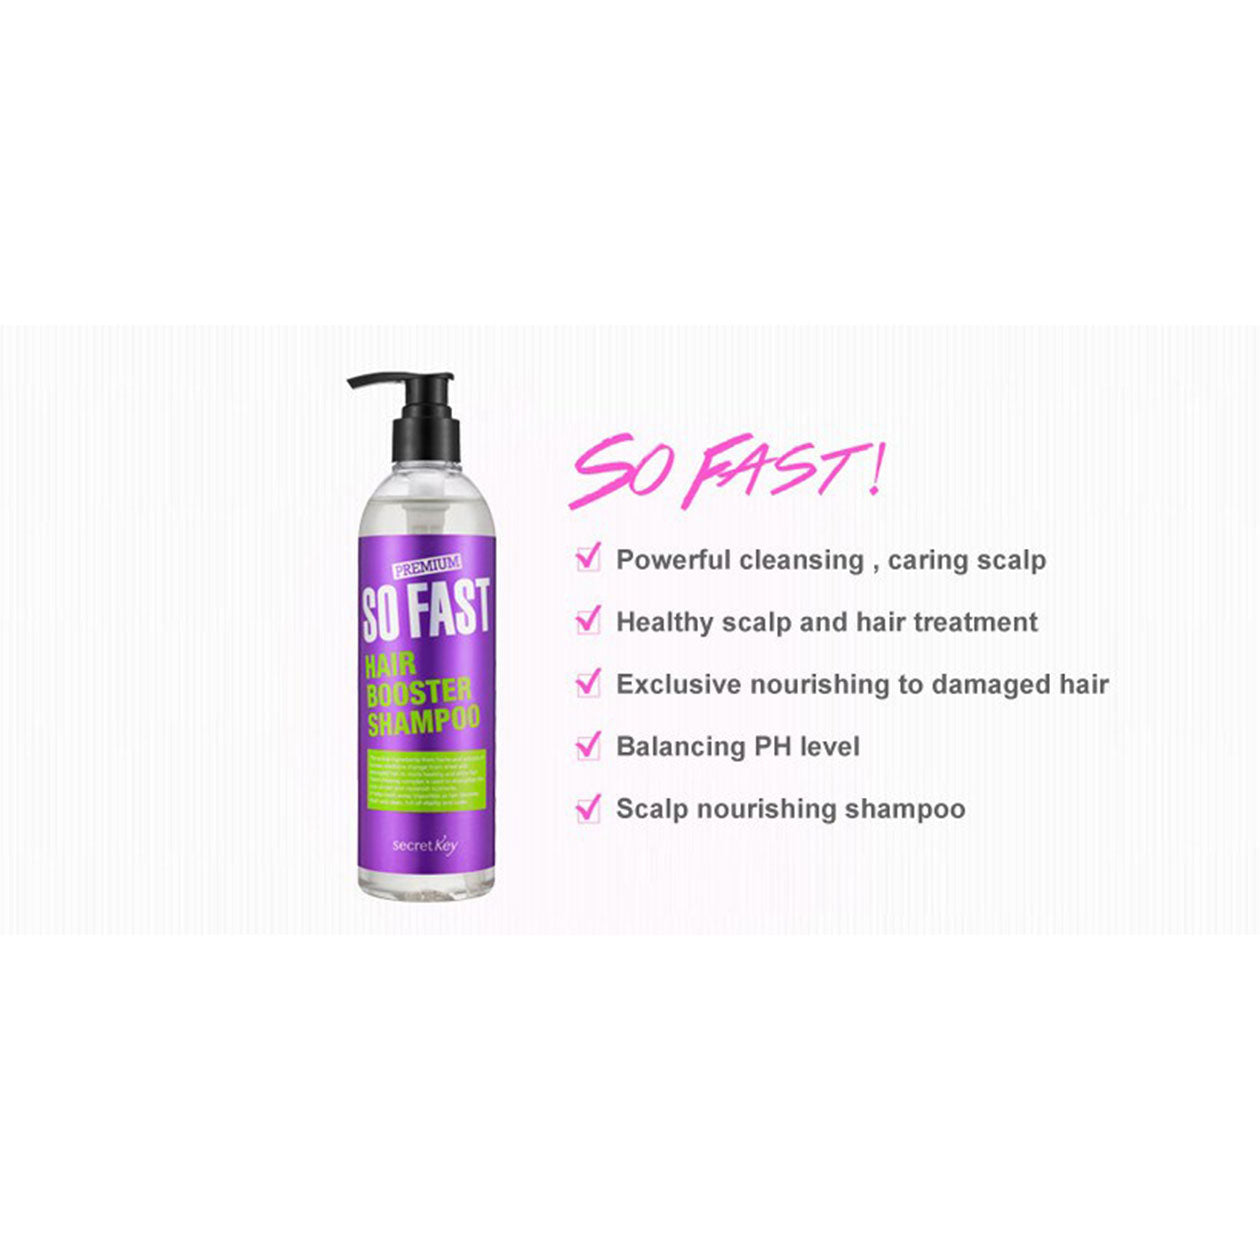 (Mhark) Secret Key Premium So Fast Hair Booster Shampoo 360ml - DODOSKIN